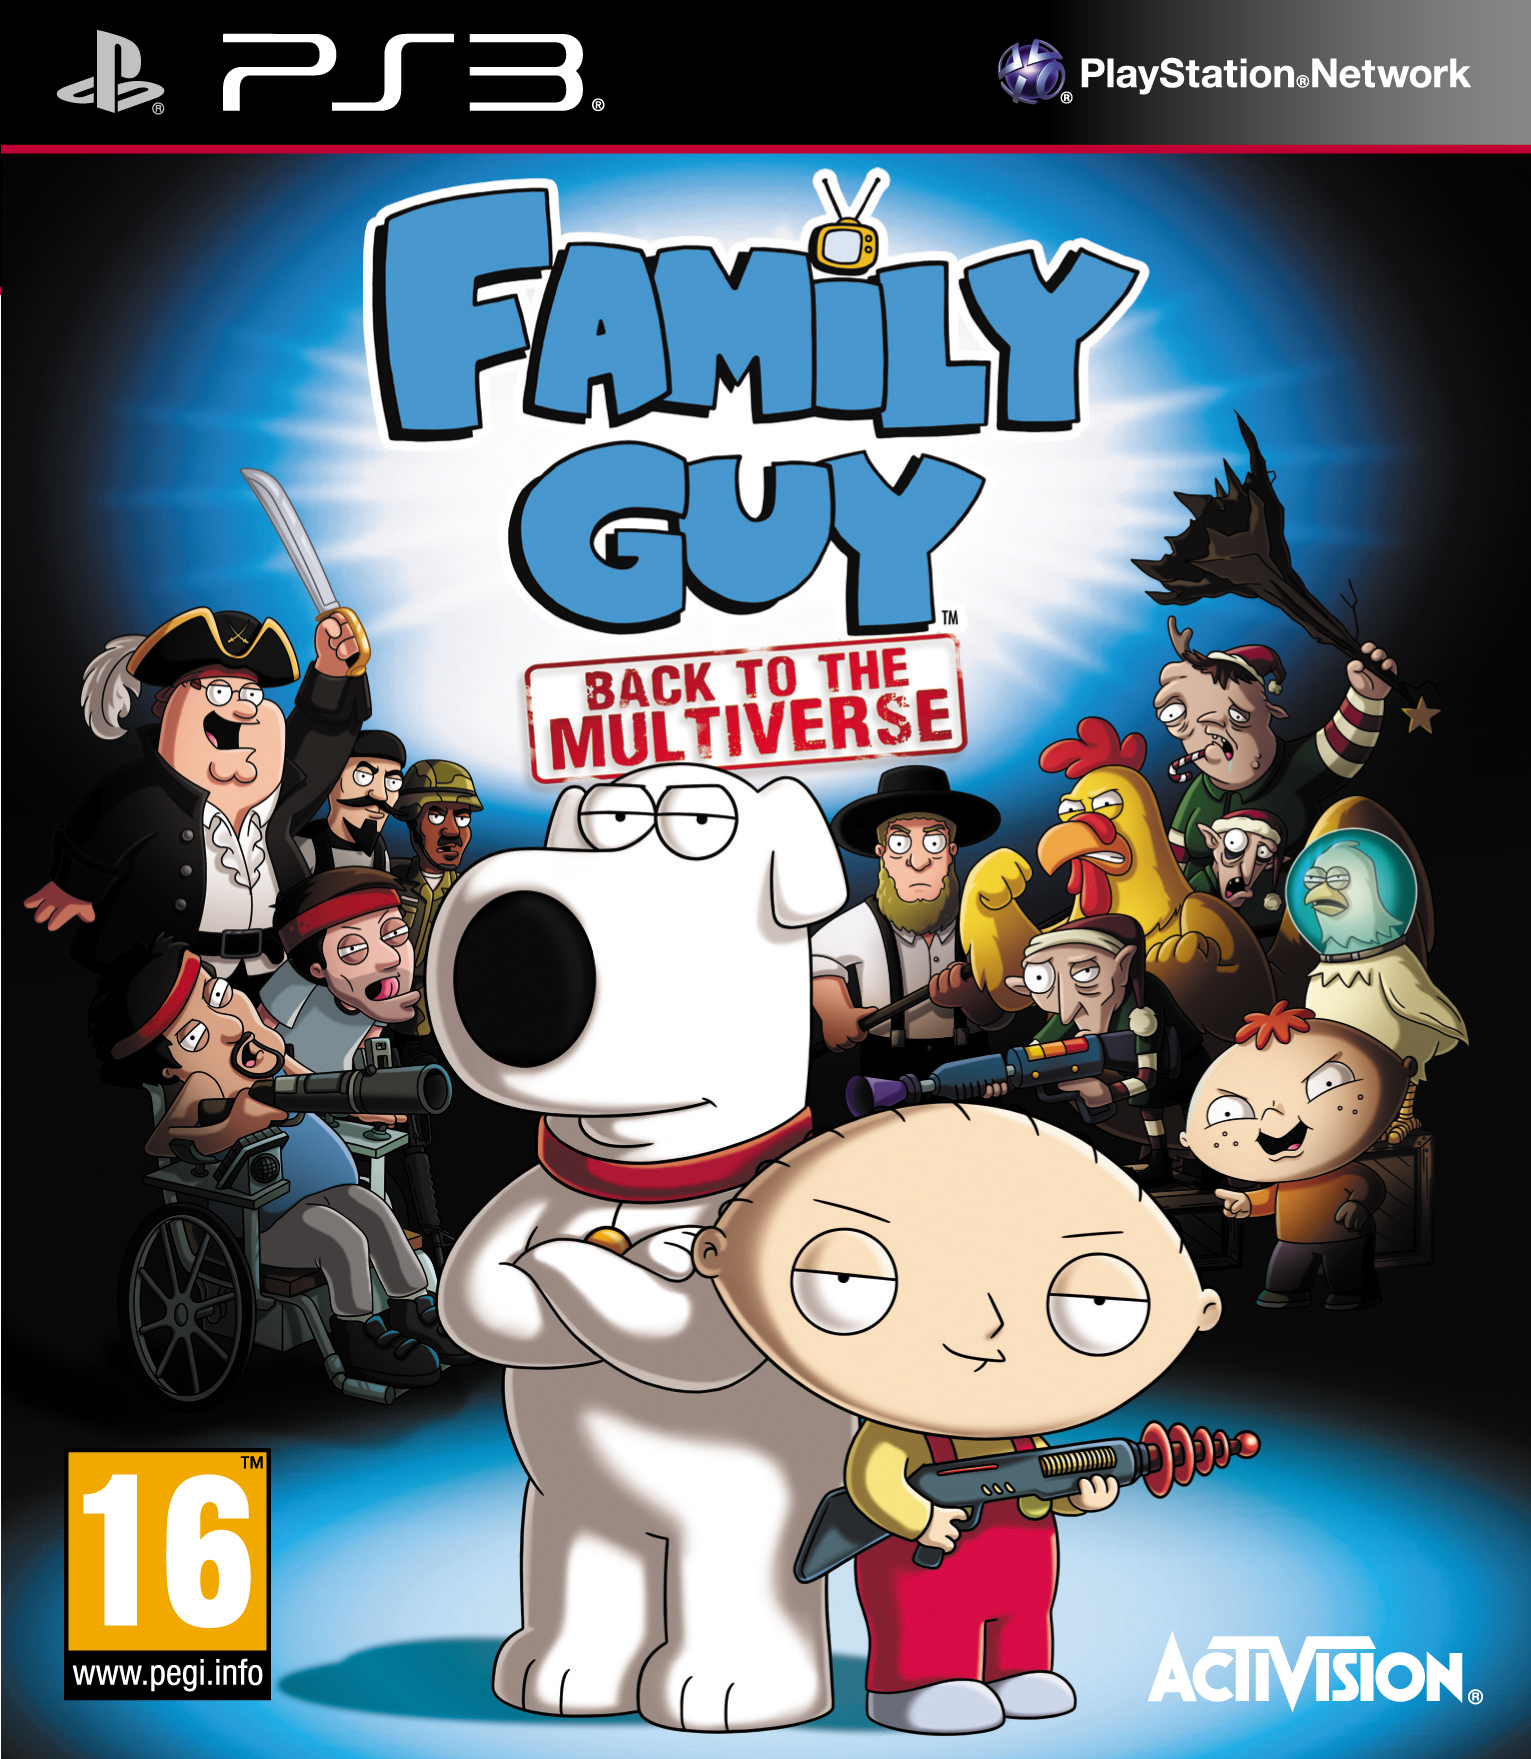 Family guy back. Family guy ps3. Family guy Xbox 360. Family guy: back to the Multiverse. Family guy back to the Multiverse Xbox 360.